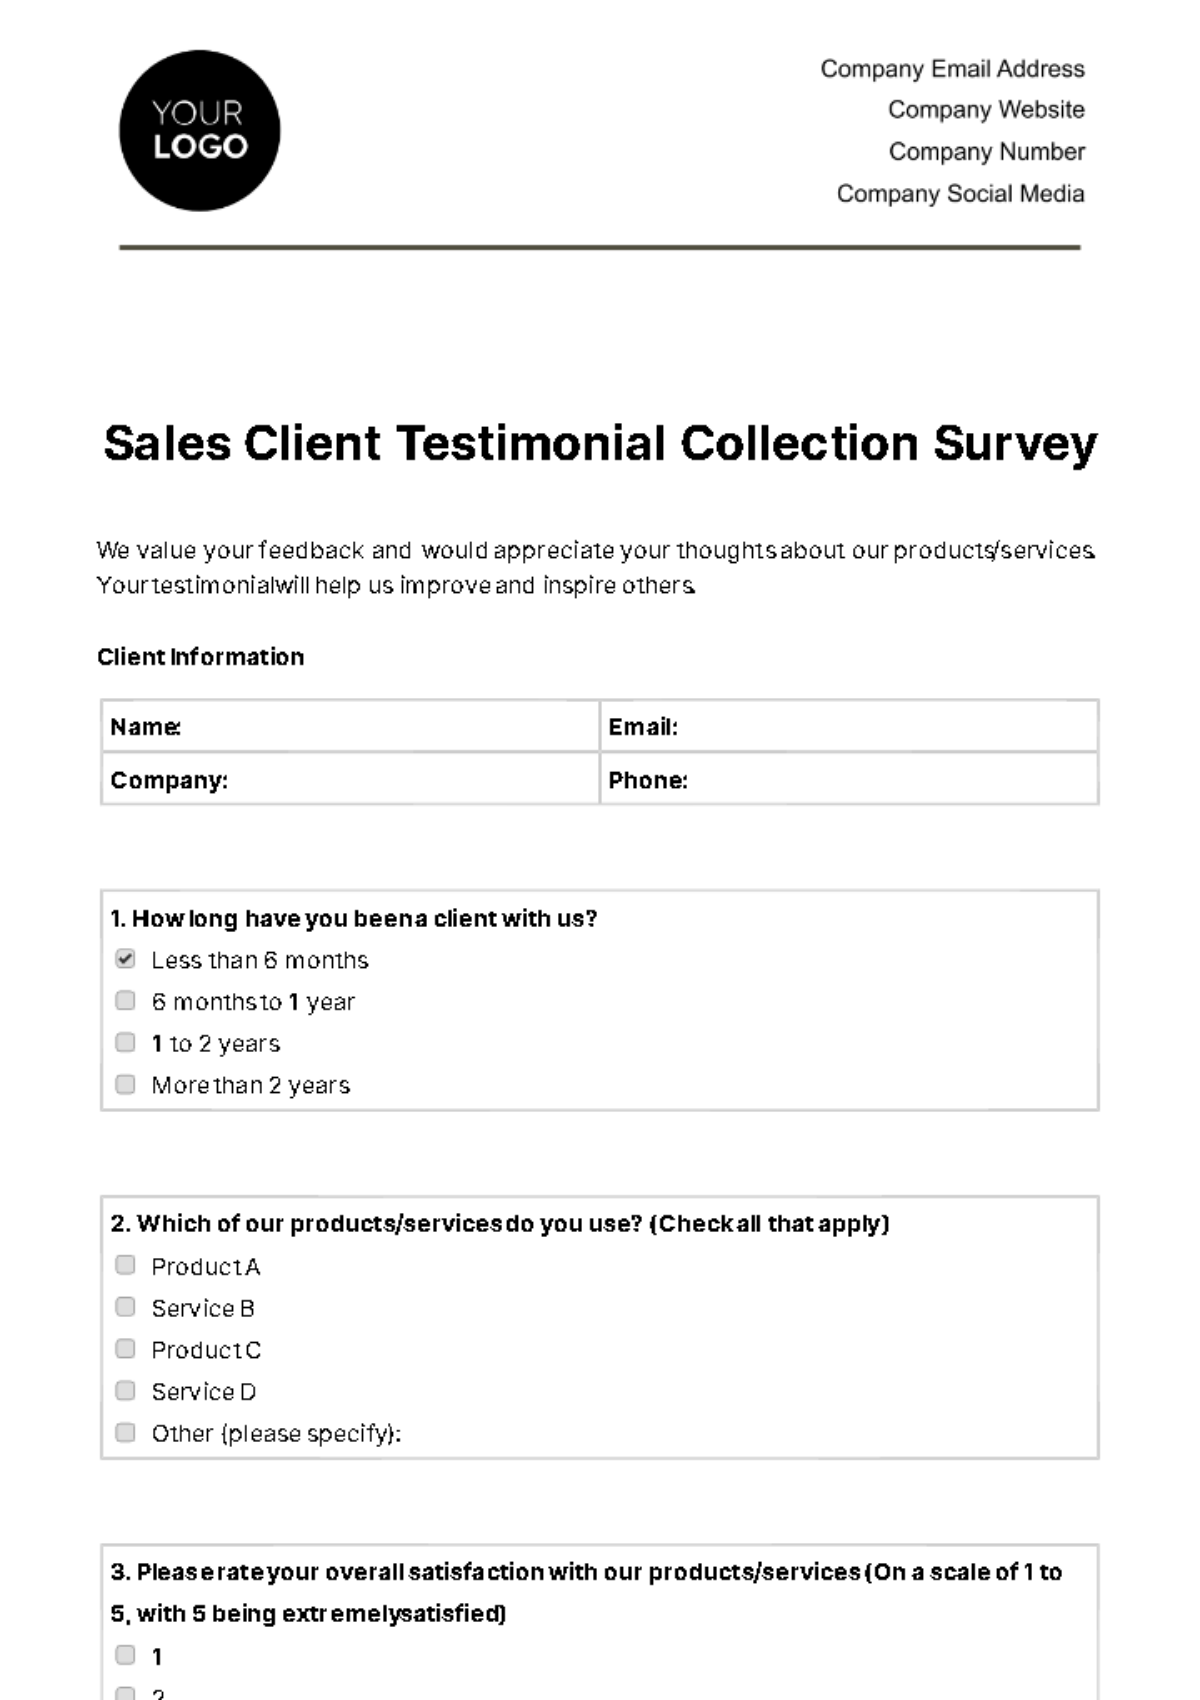 Free Sales Client Testimonial Collection Survey Template